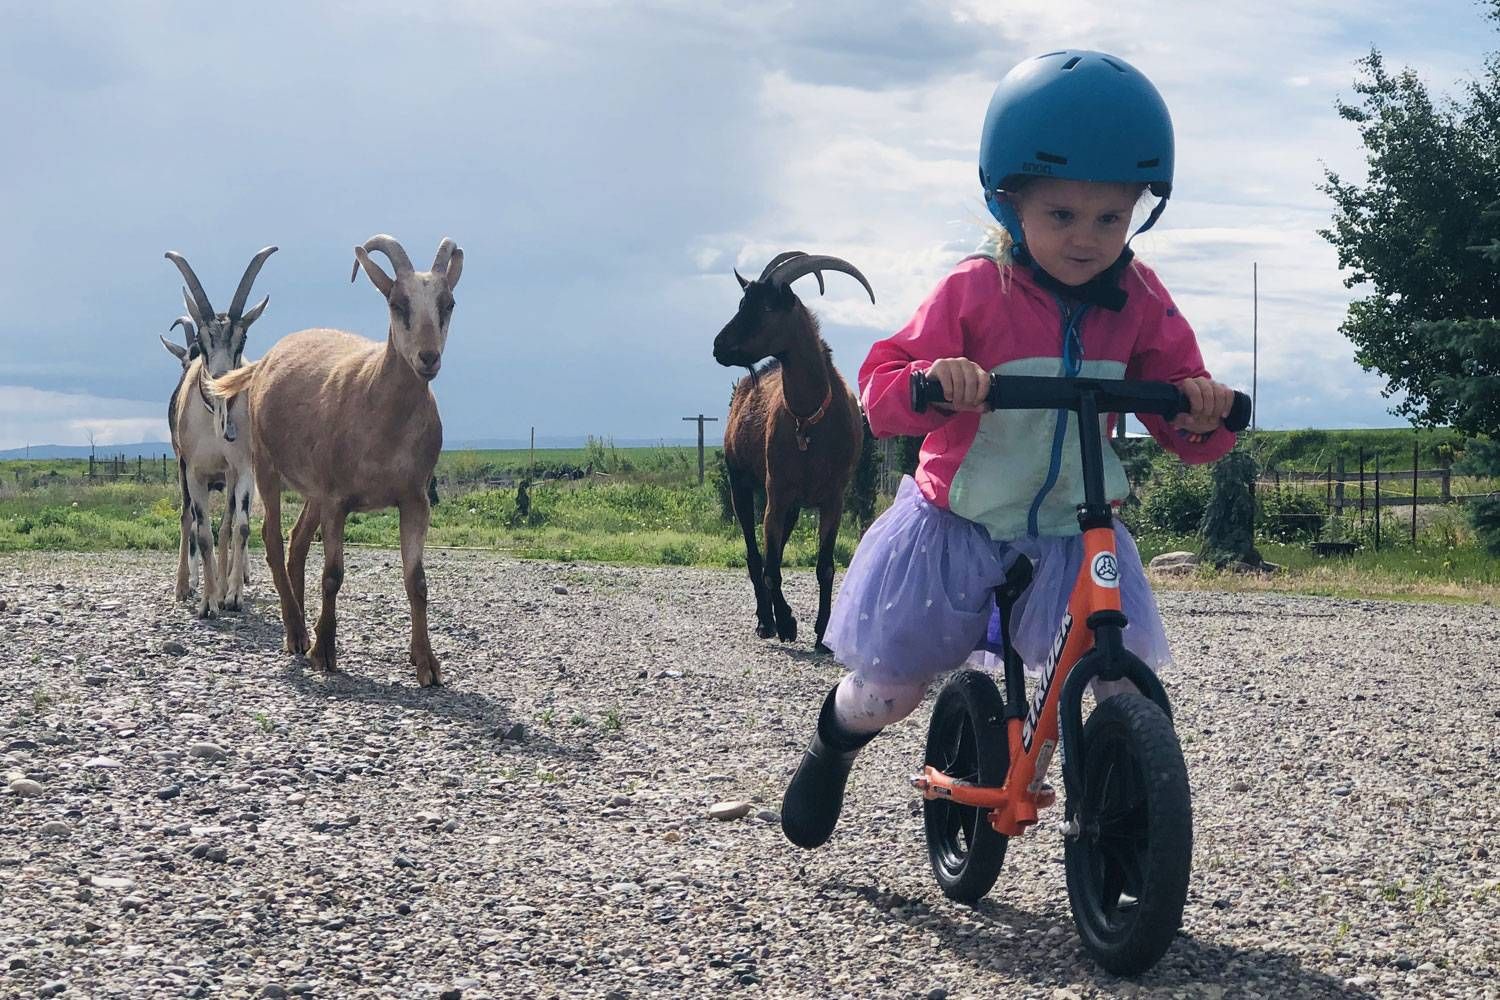 A girl rides an orange Strider balance bike past some goats